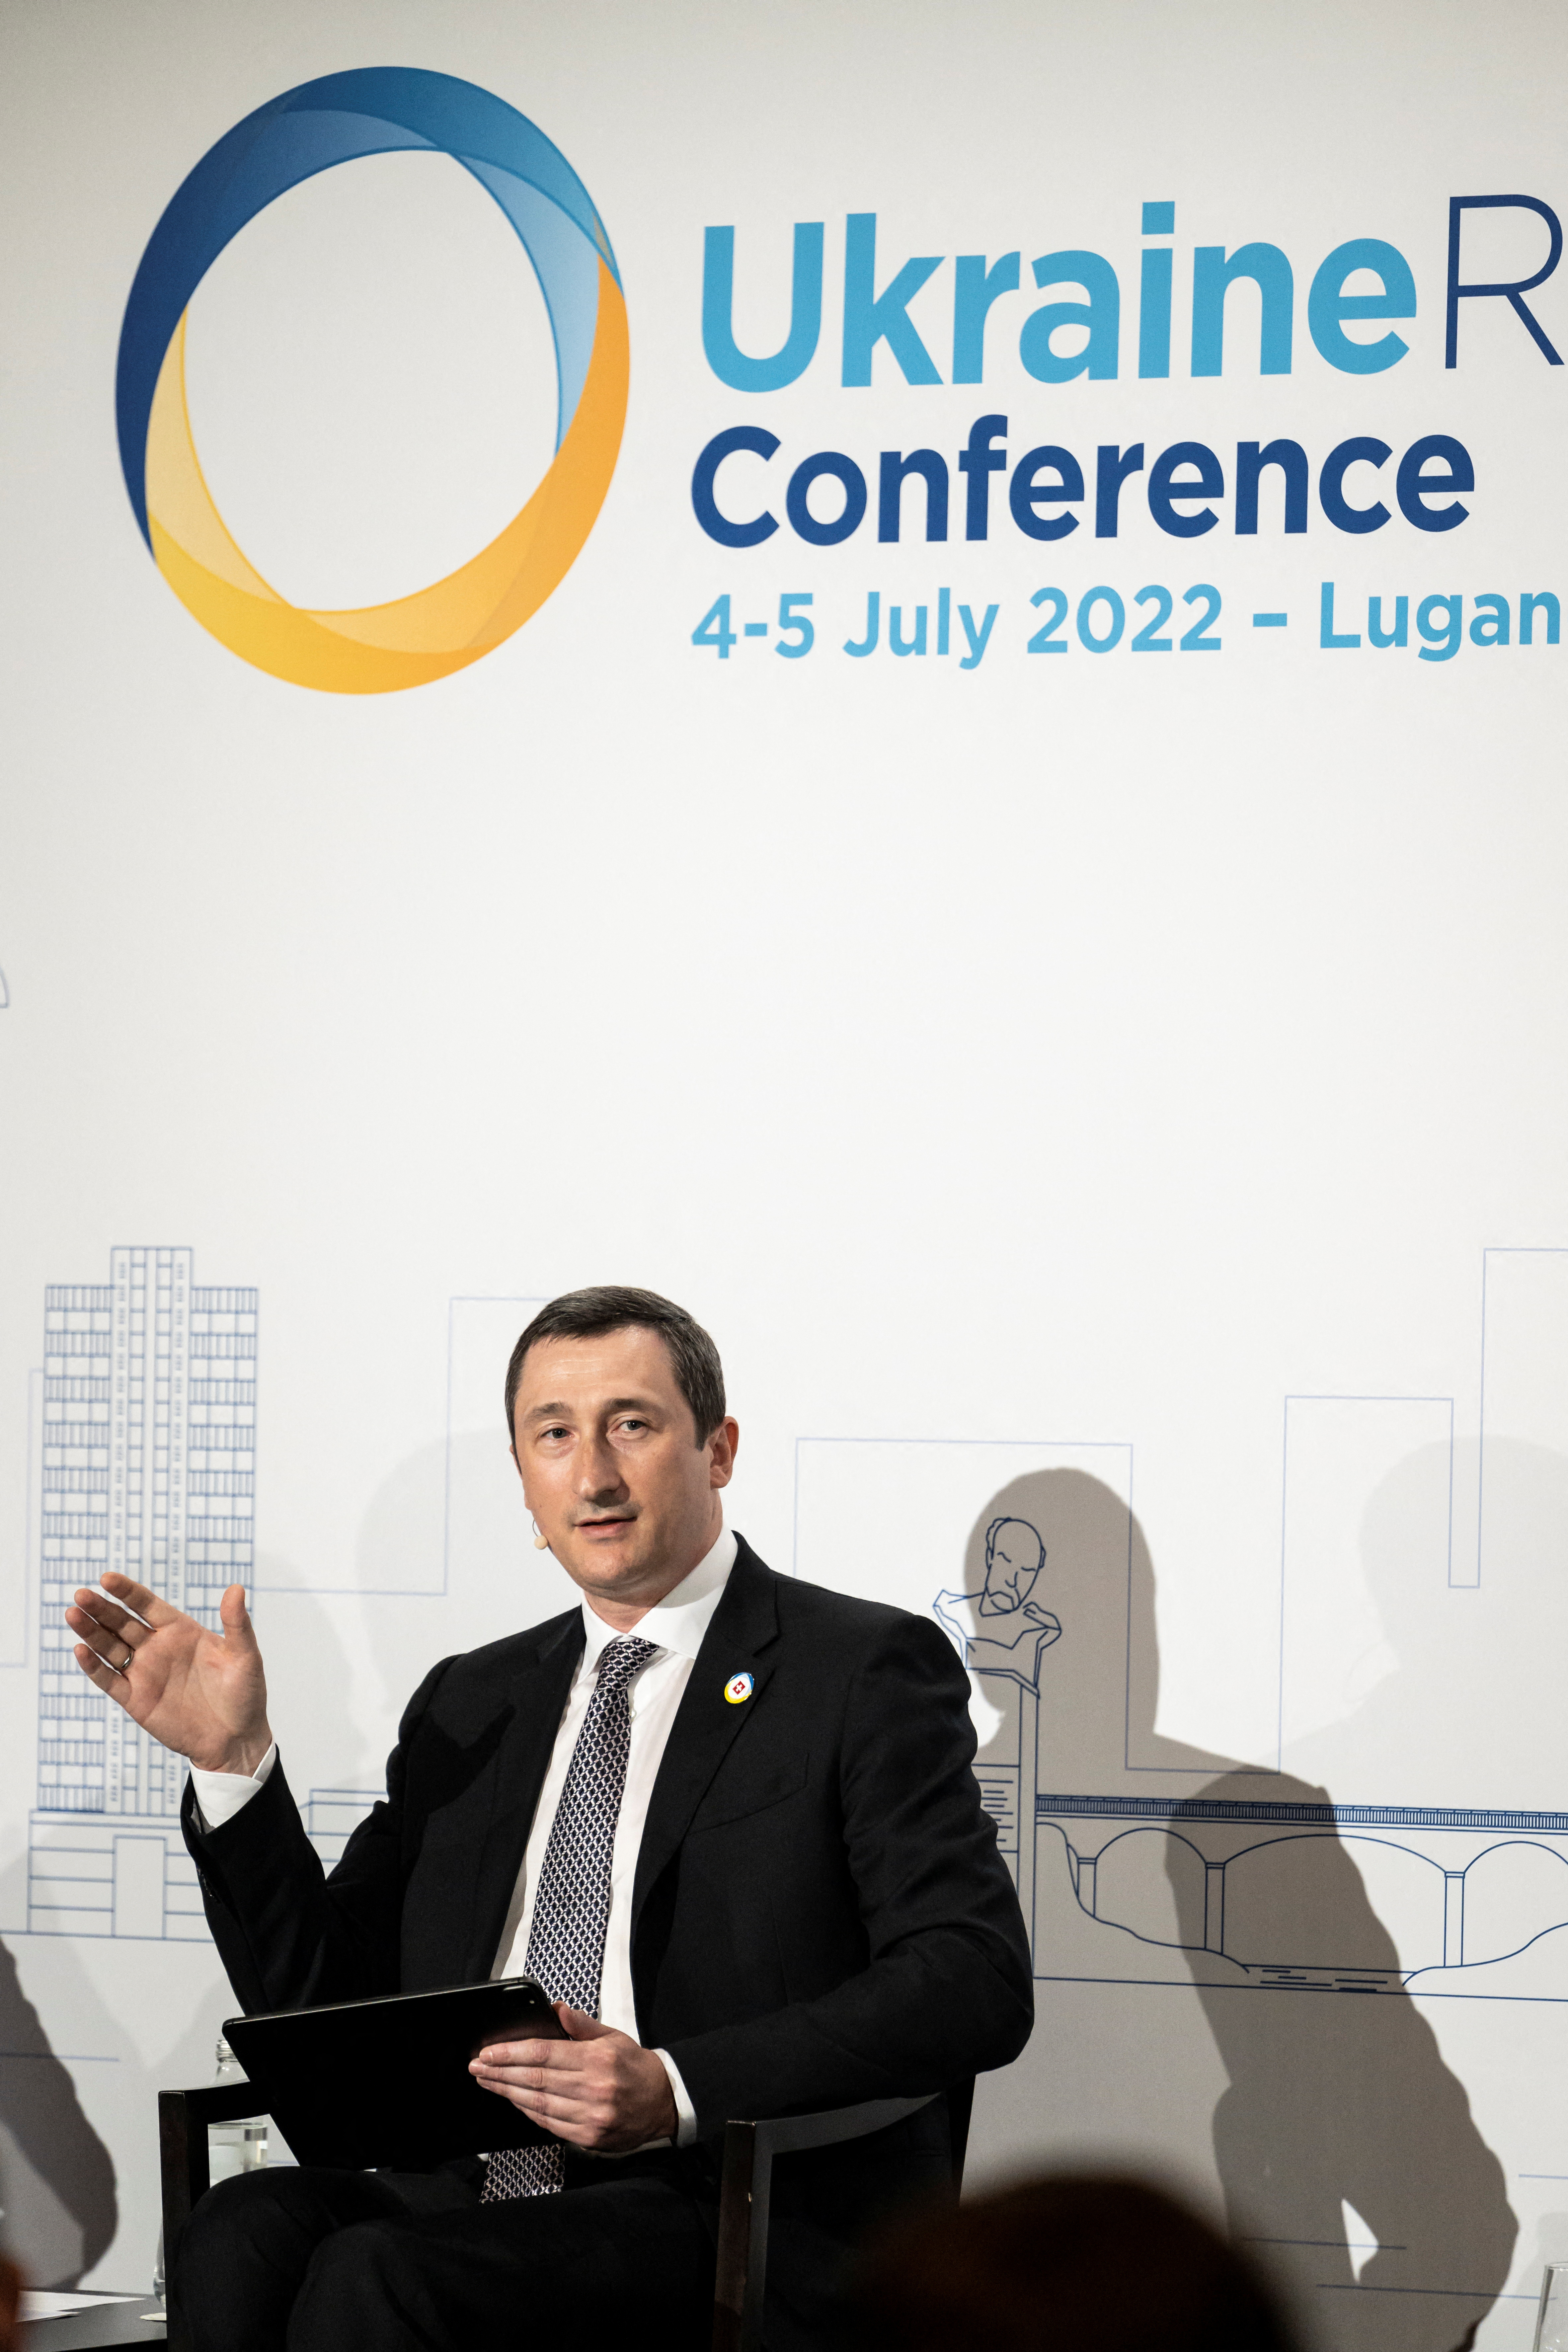 Ukraine Recovery Conference in Lugano